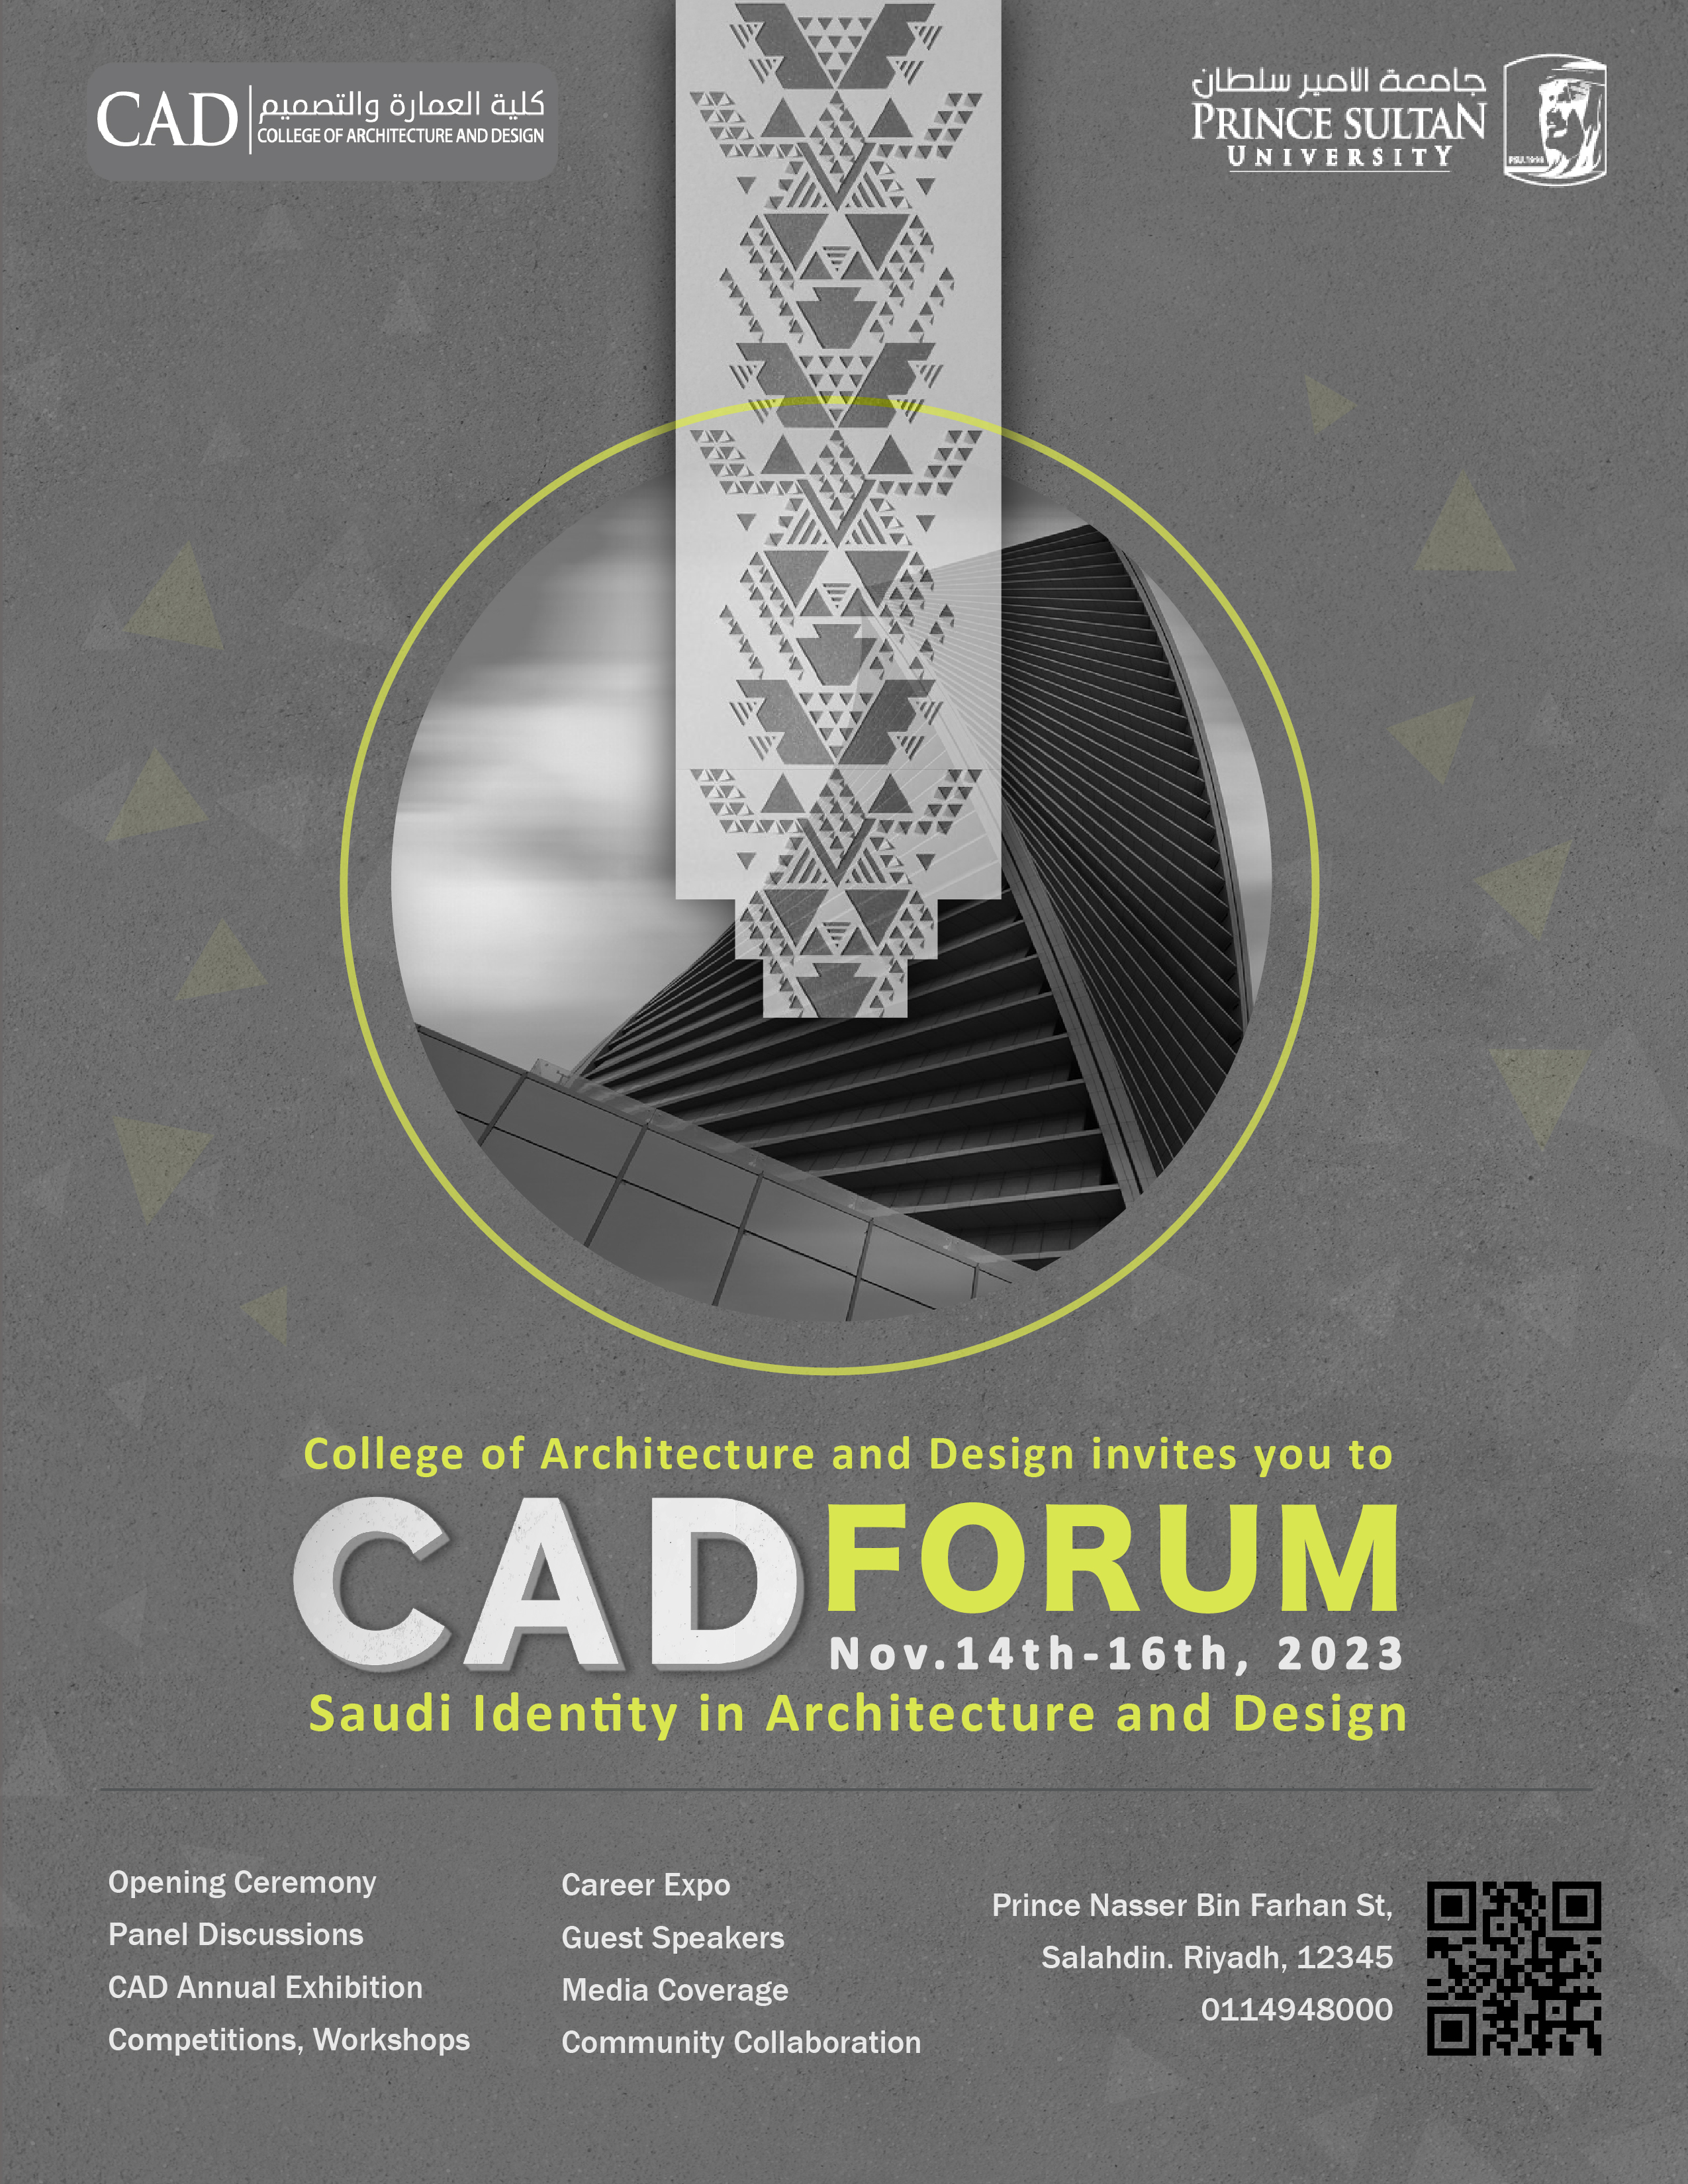 The College of Architecture and Design Annual Forum